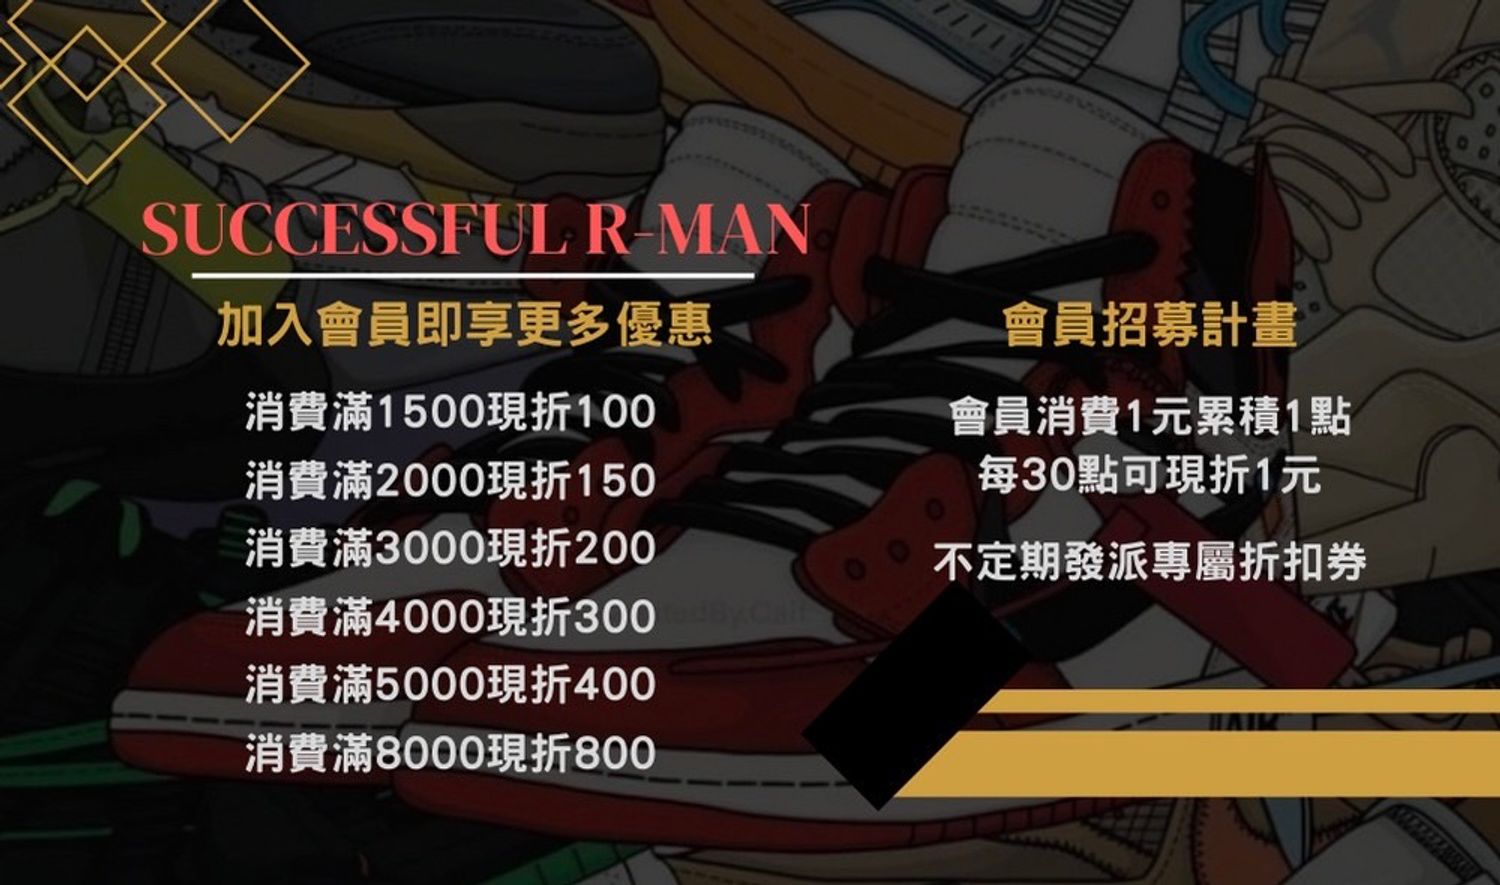 Successful R-Man - 